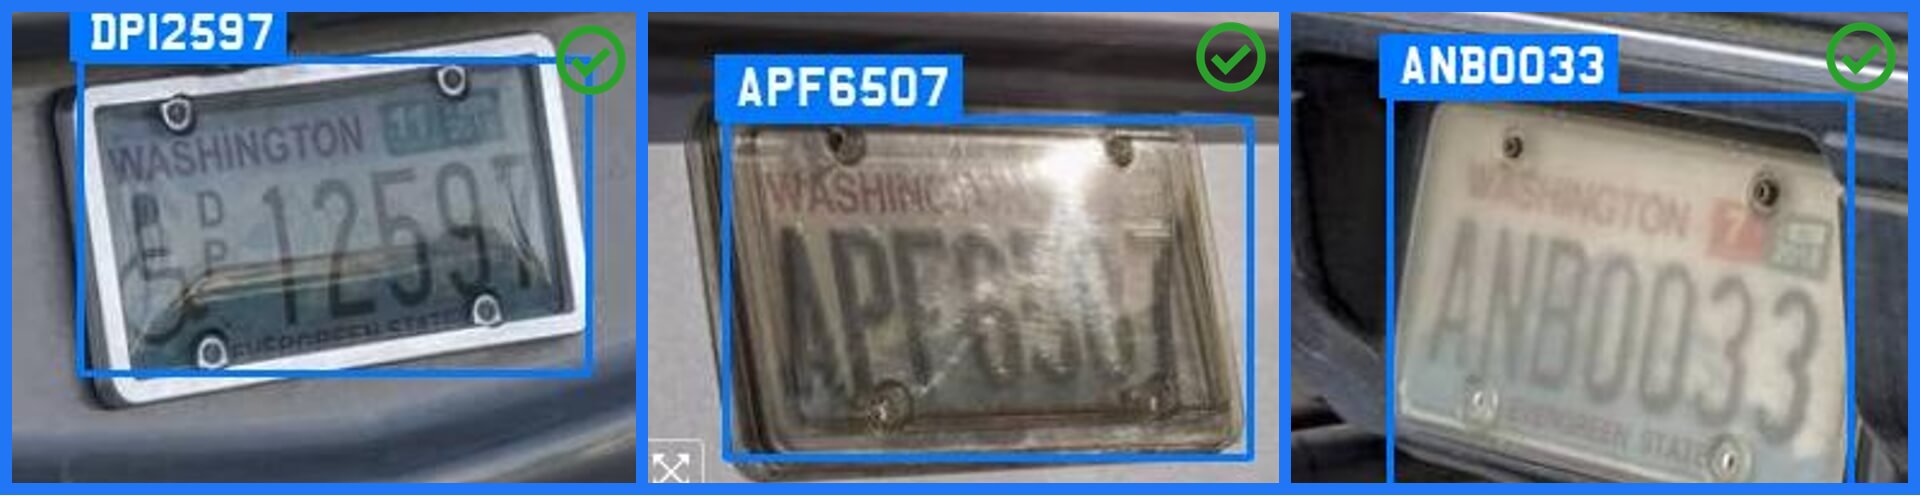 ALPR ANPR Results Tinted License Plates